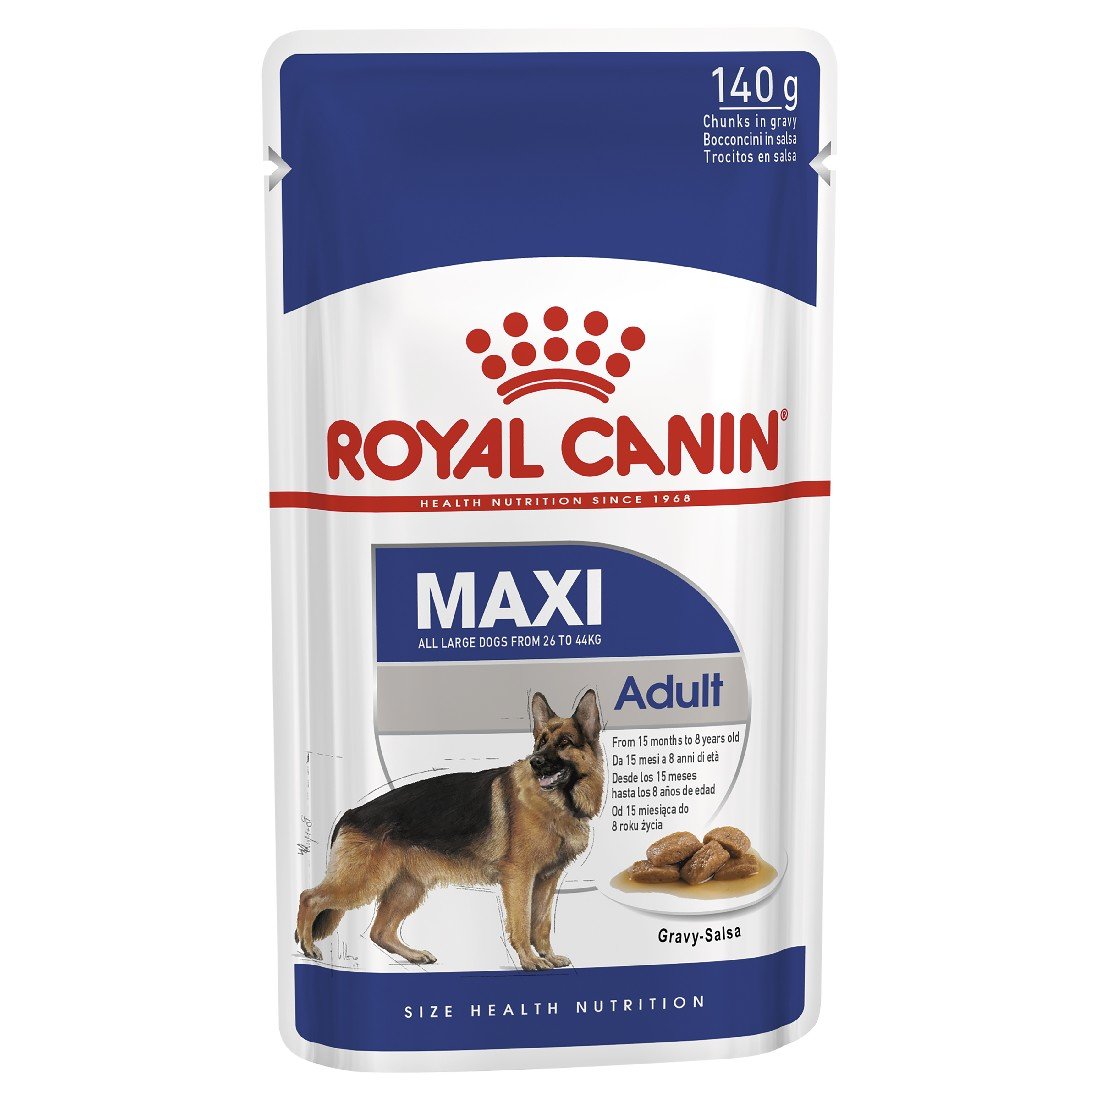 Royal Canin Maxi Adult kapsička 140g